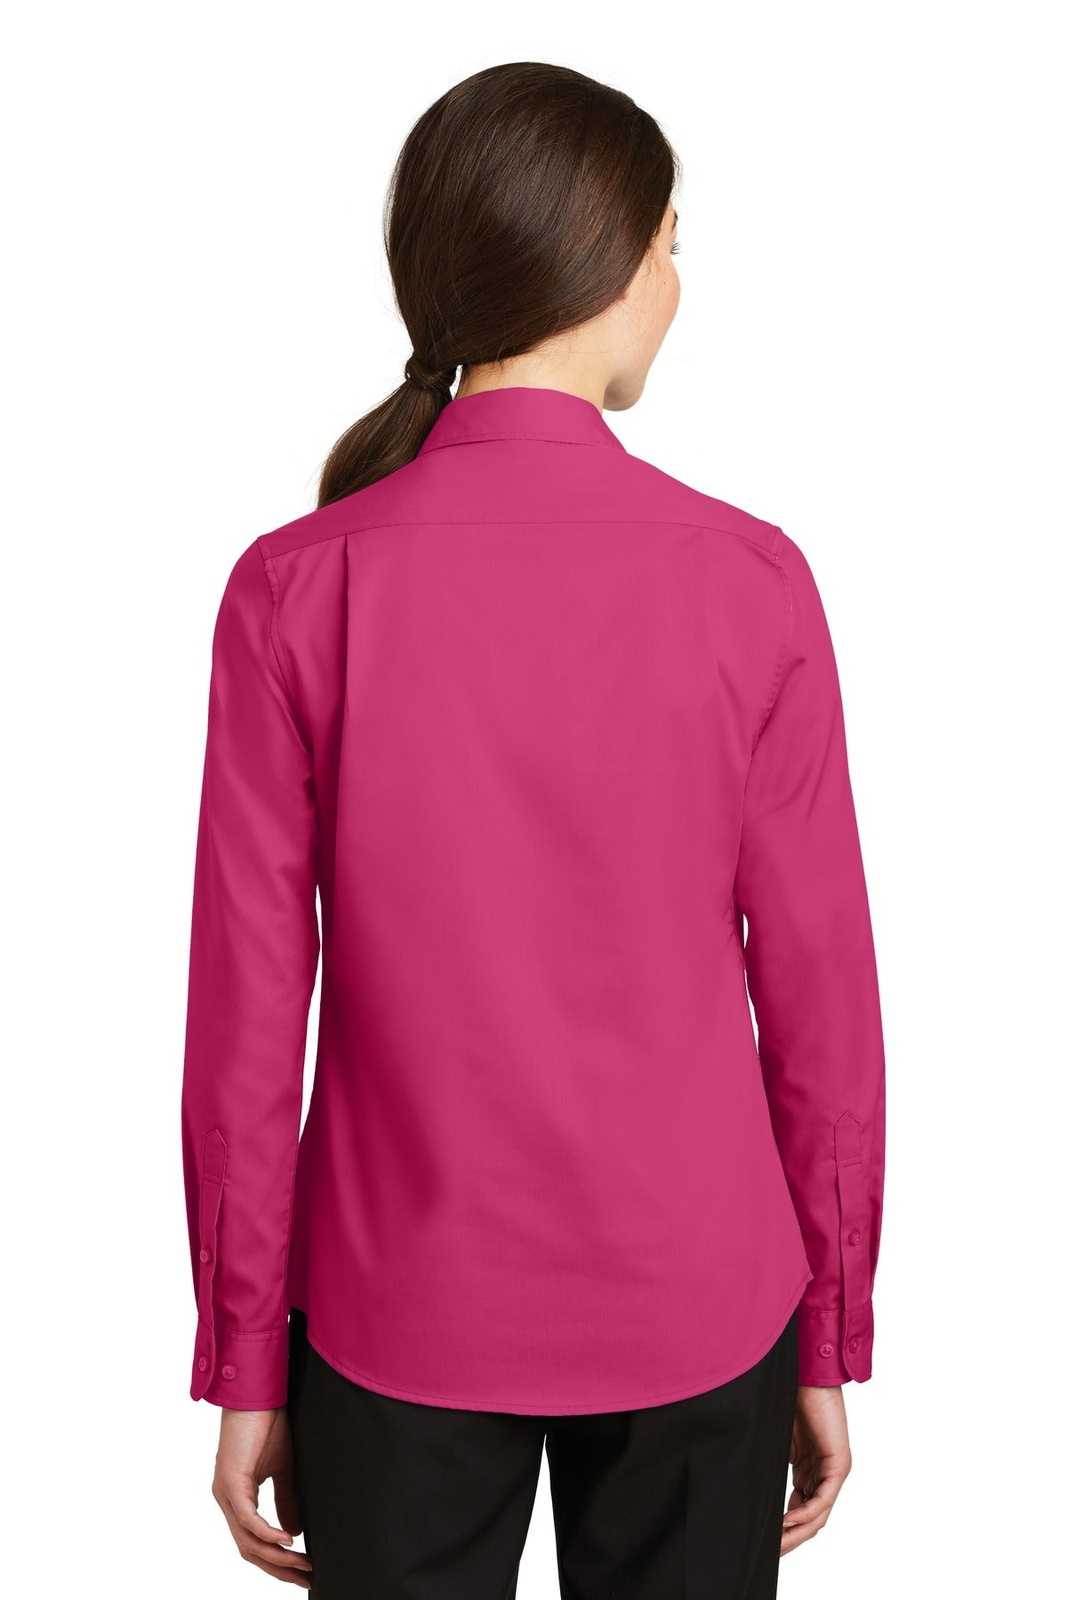 Port Authority L663 Ladies Superpro Twill Shirt - Pink Azalea - HIT a Double - 2